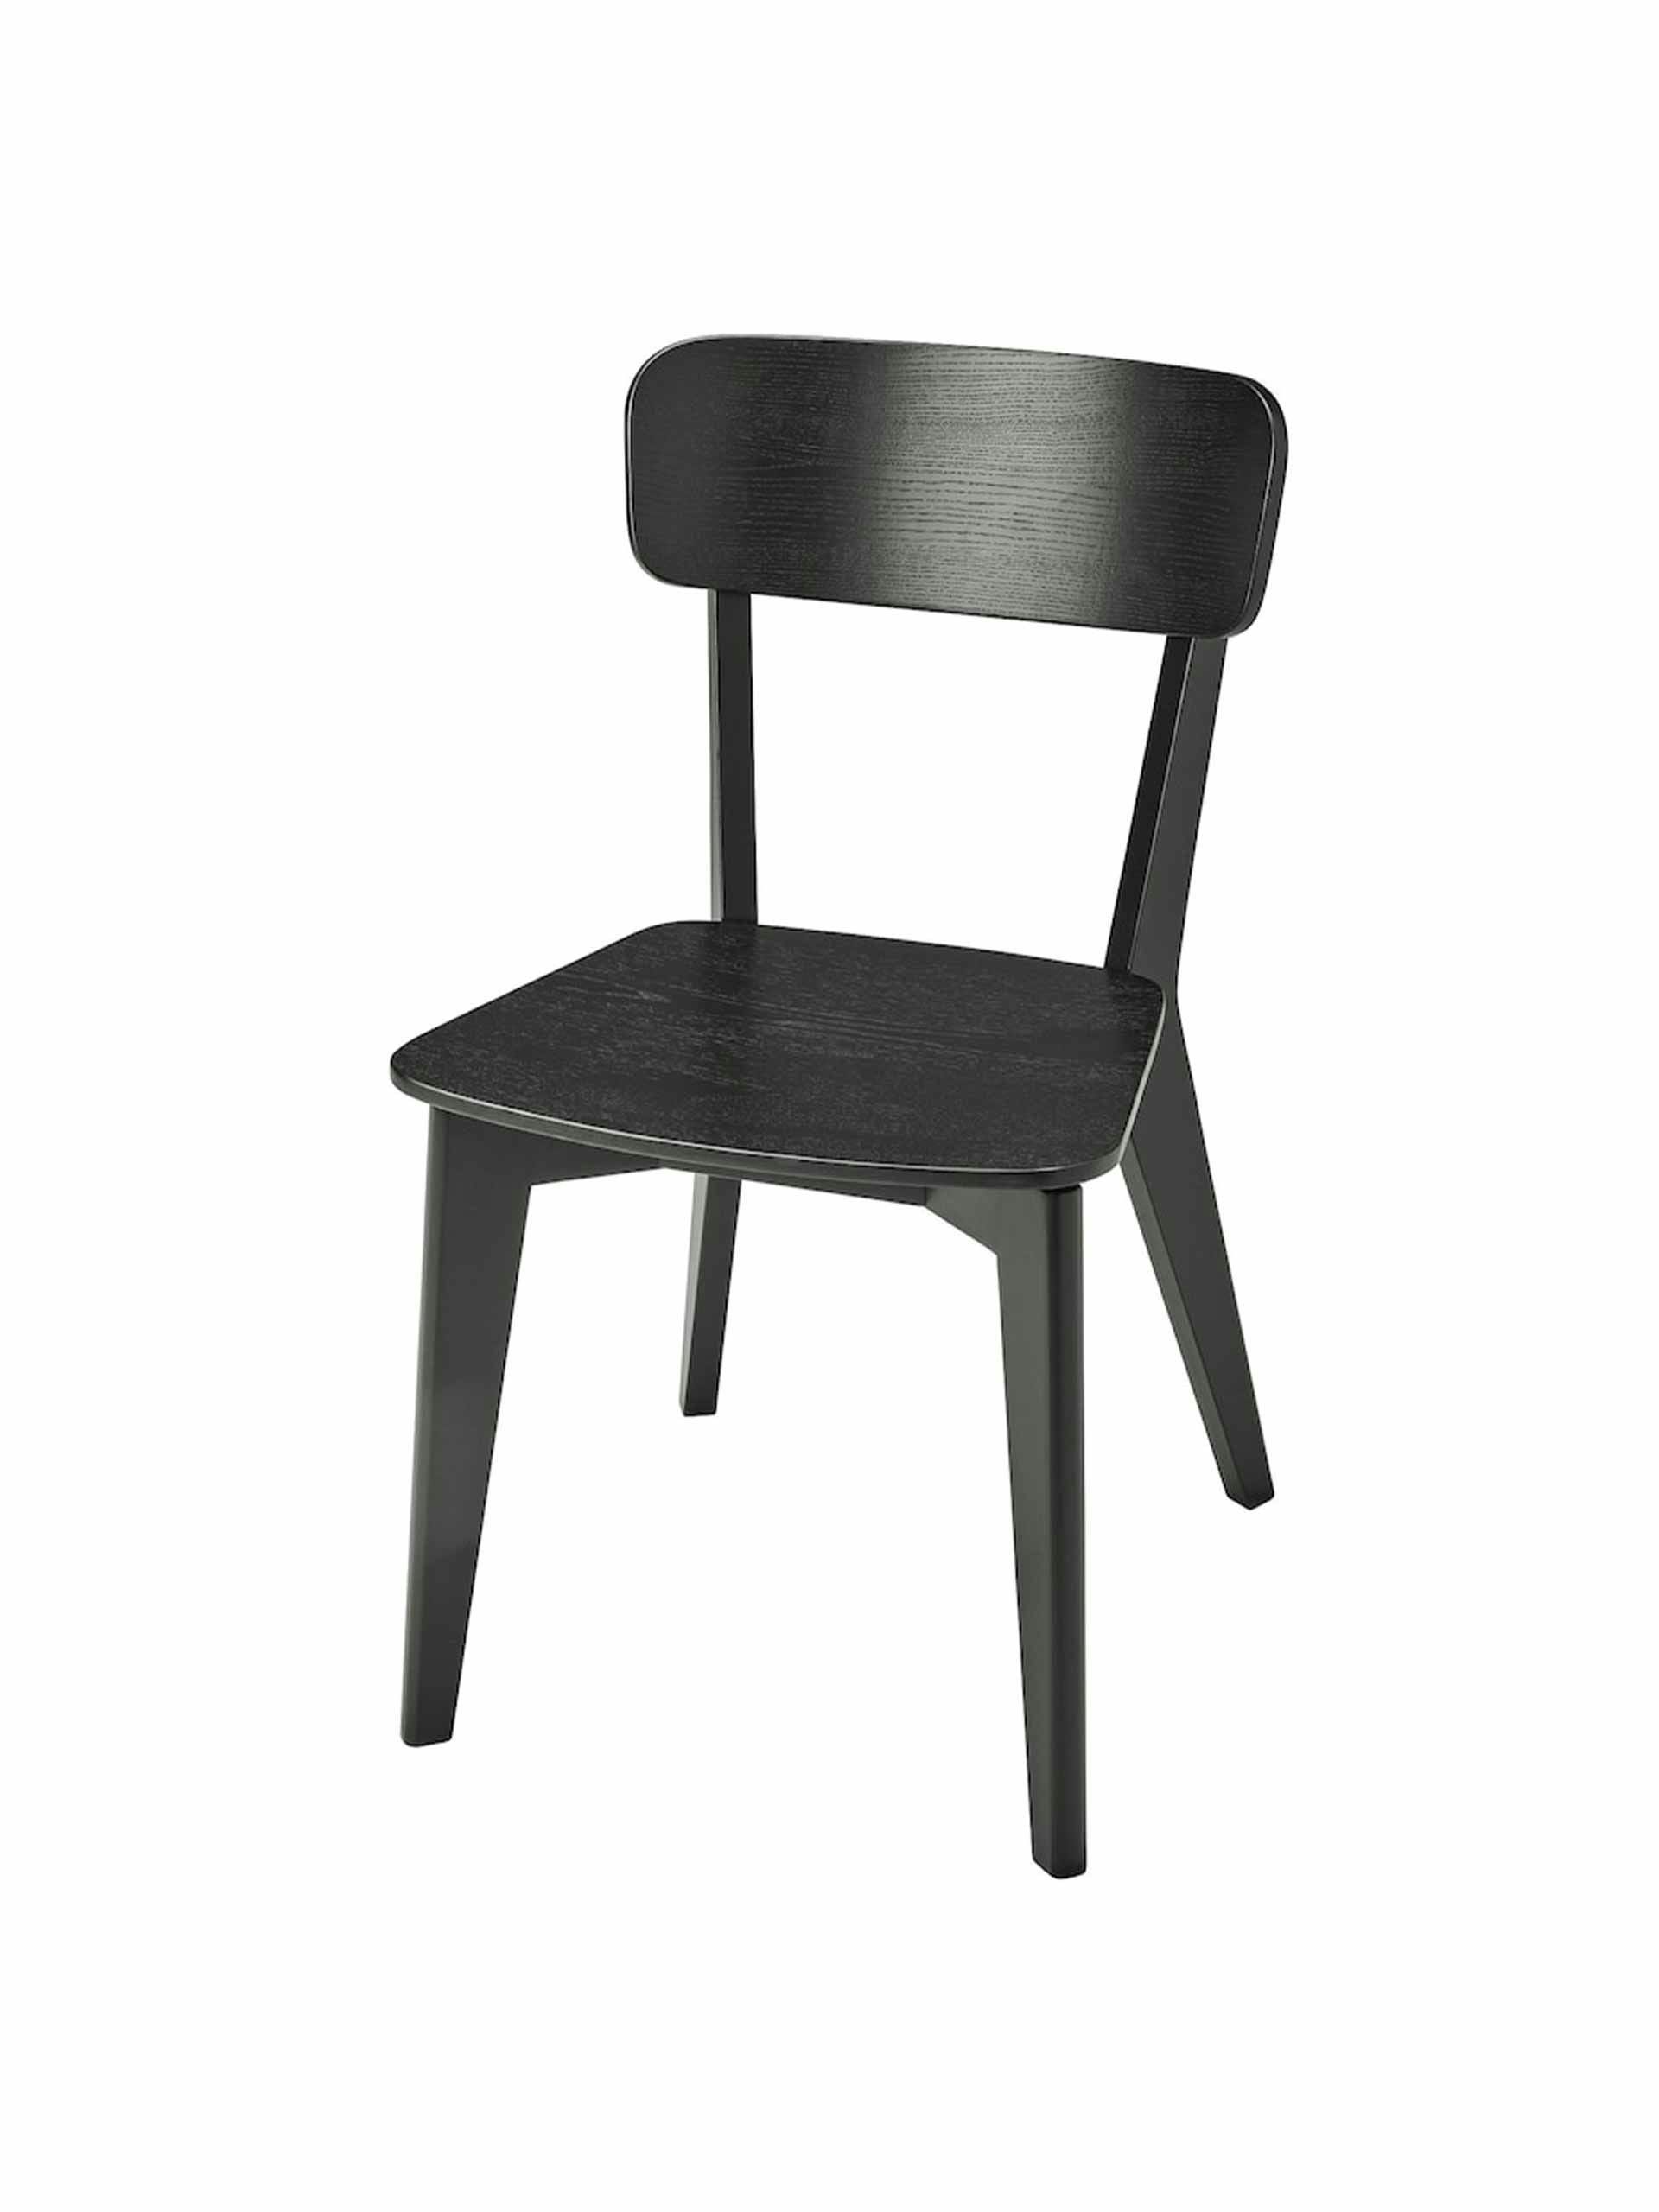 Wooden black chair